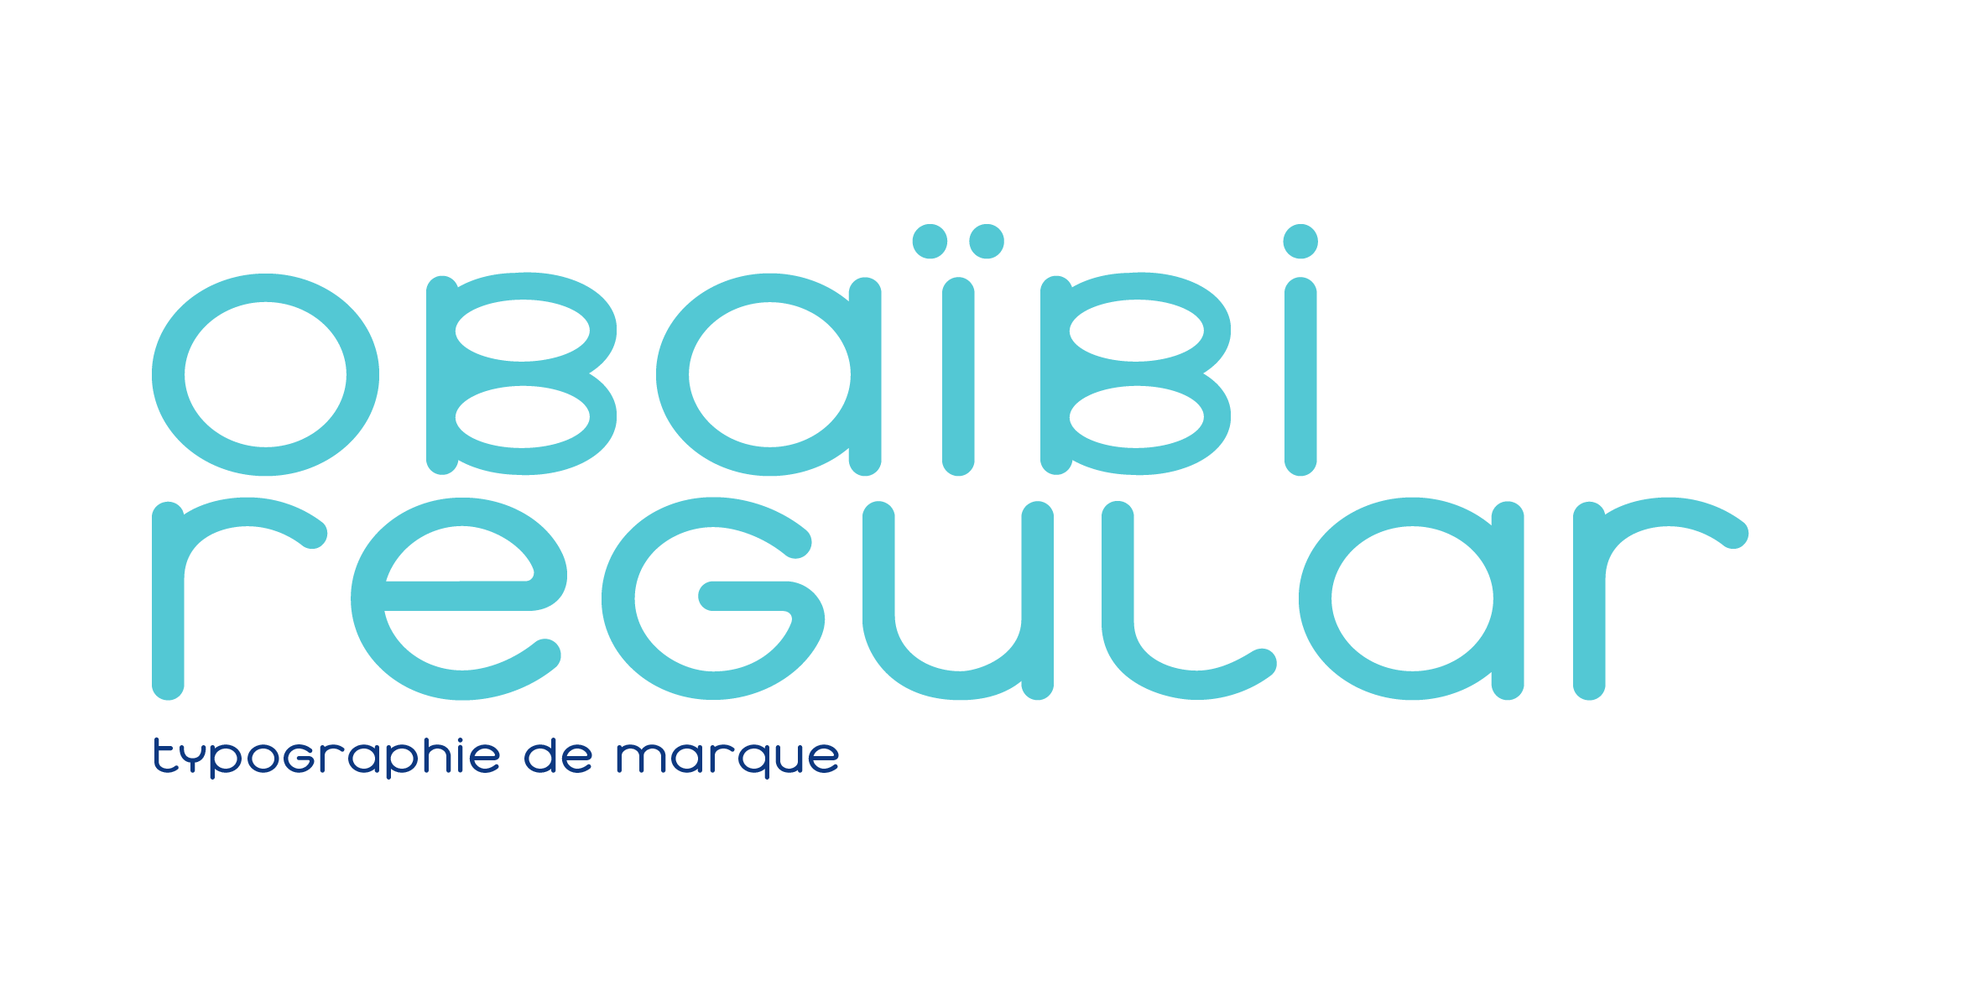 Typographie de marque Obaïbi